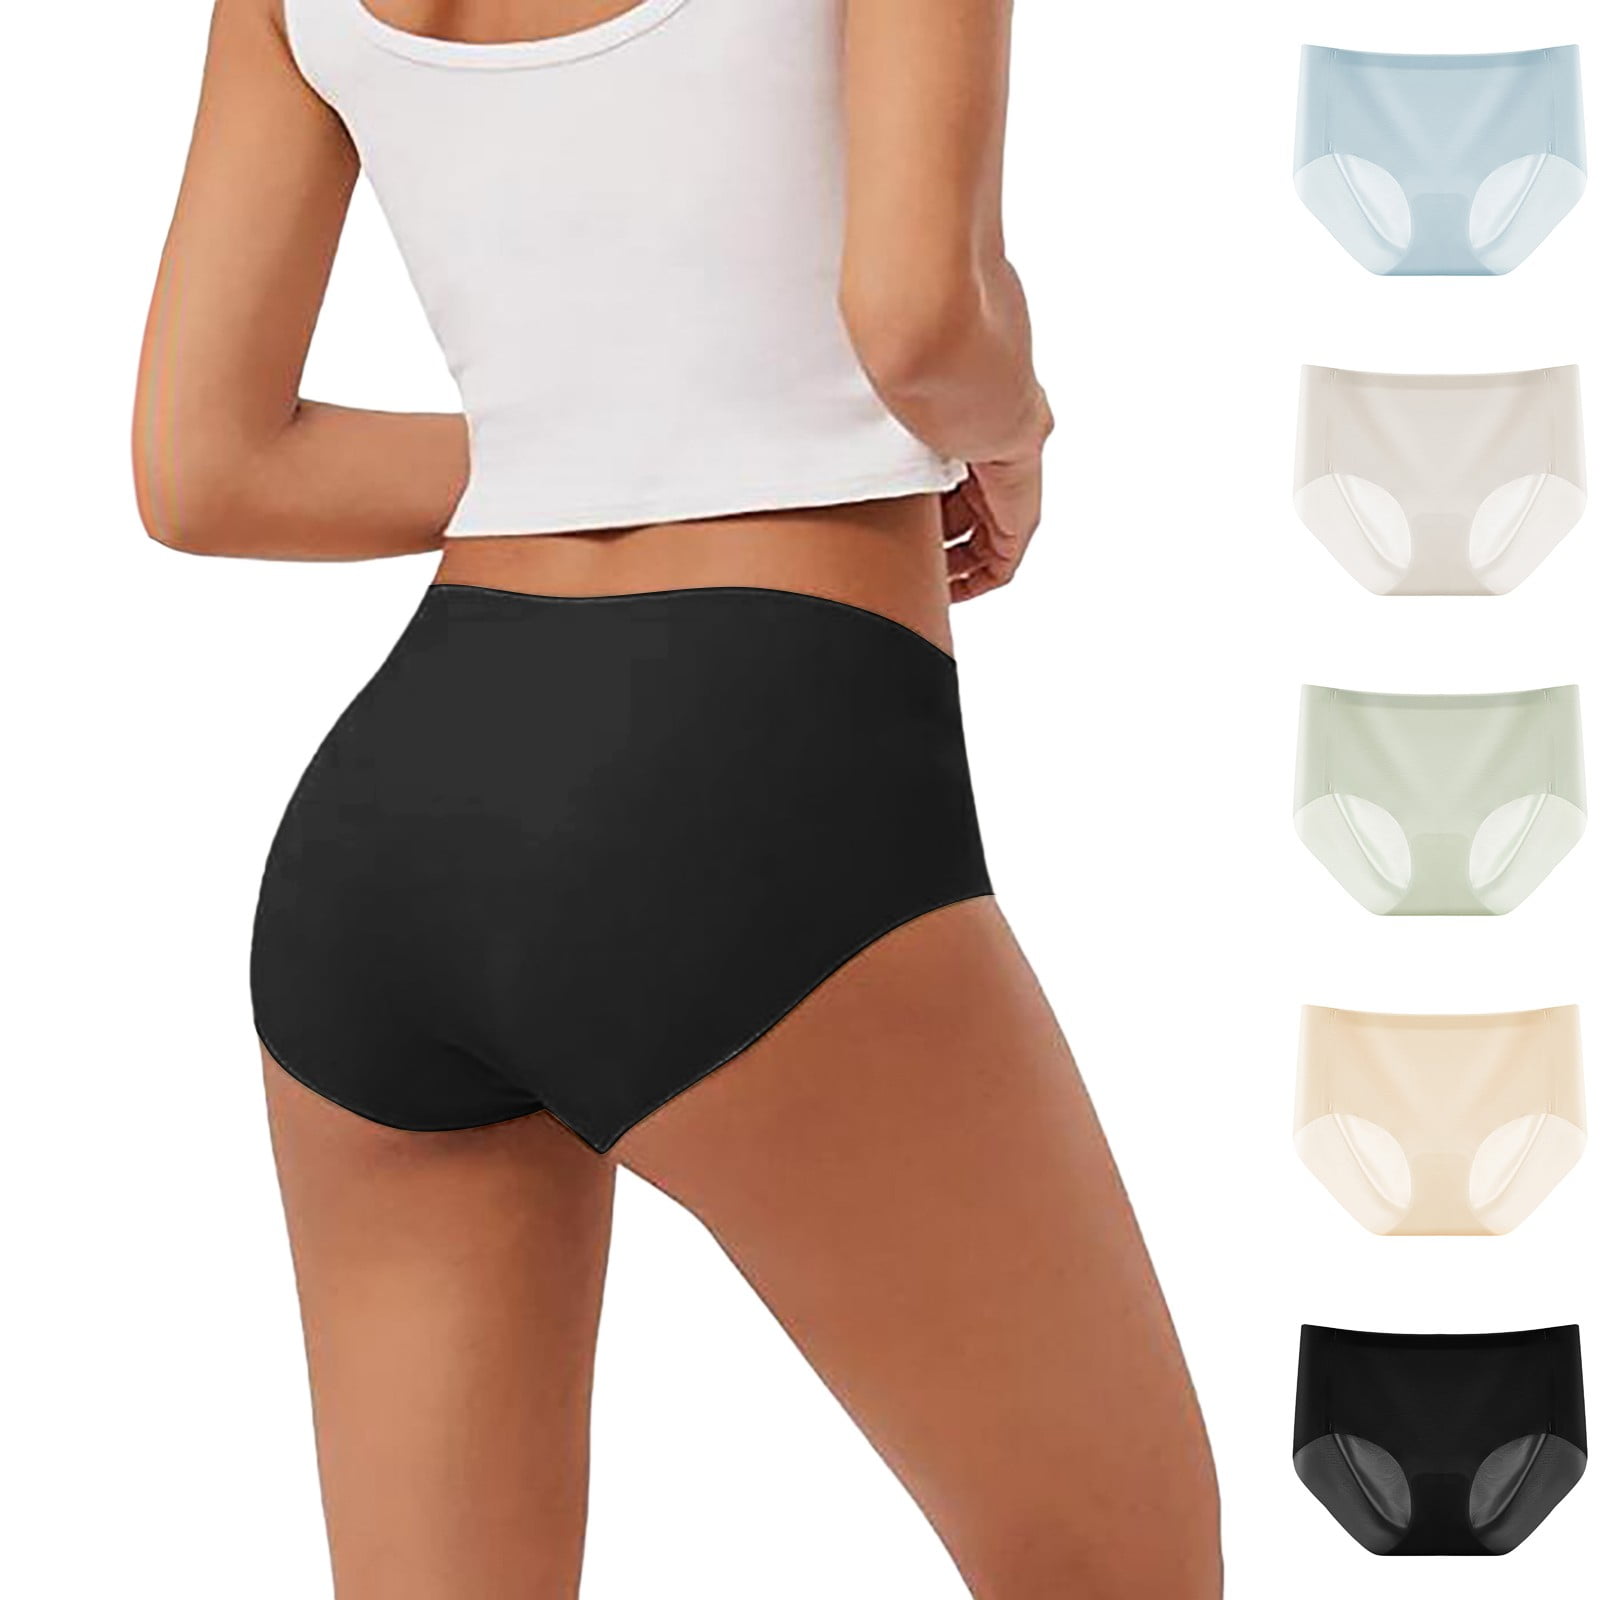 KaLI_store Panties for Women Pack Women's Underwear Cotton Breathable Brief  Ladies Panties Hot Pink,XXL 